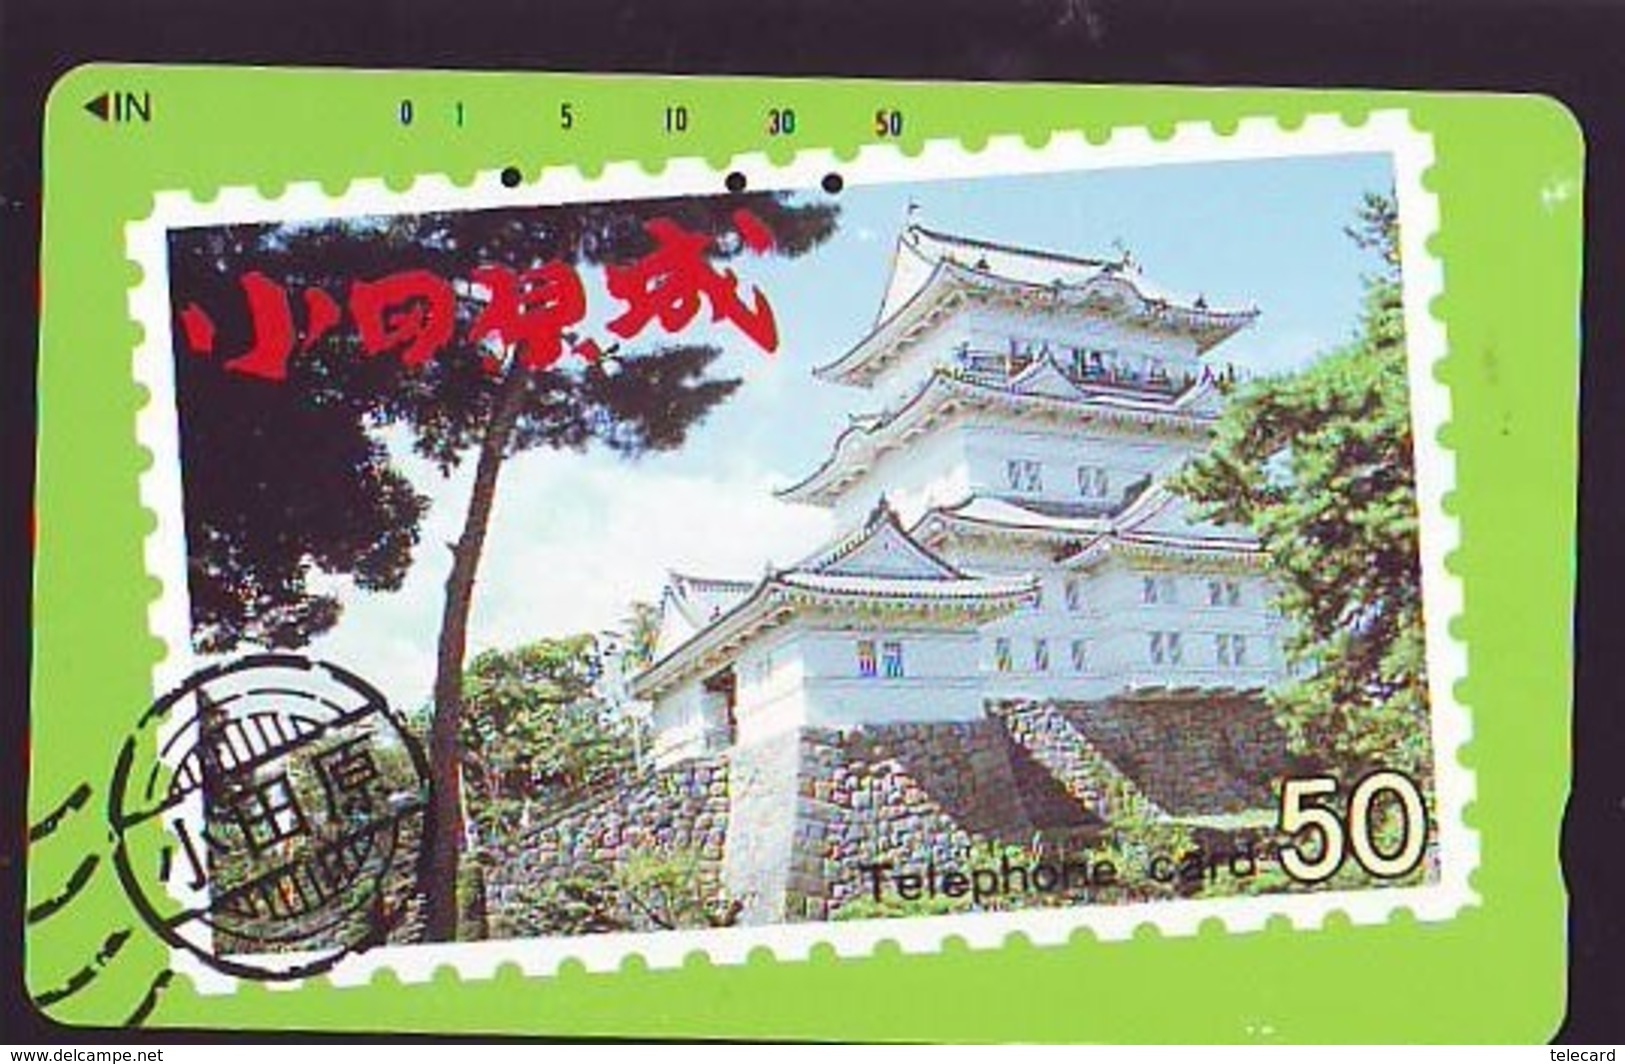 Télécarte Japon * Stamp & Phonecard On Japan Phonecard (304)  Timbre + Télécarte *  Briefmarke & TK - Sellos & Monedas